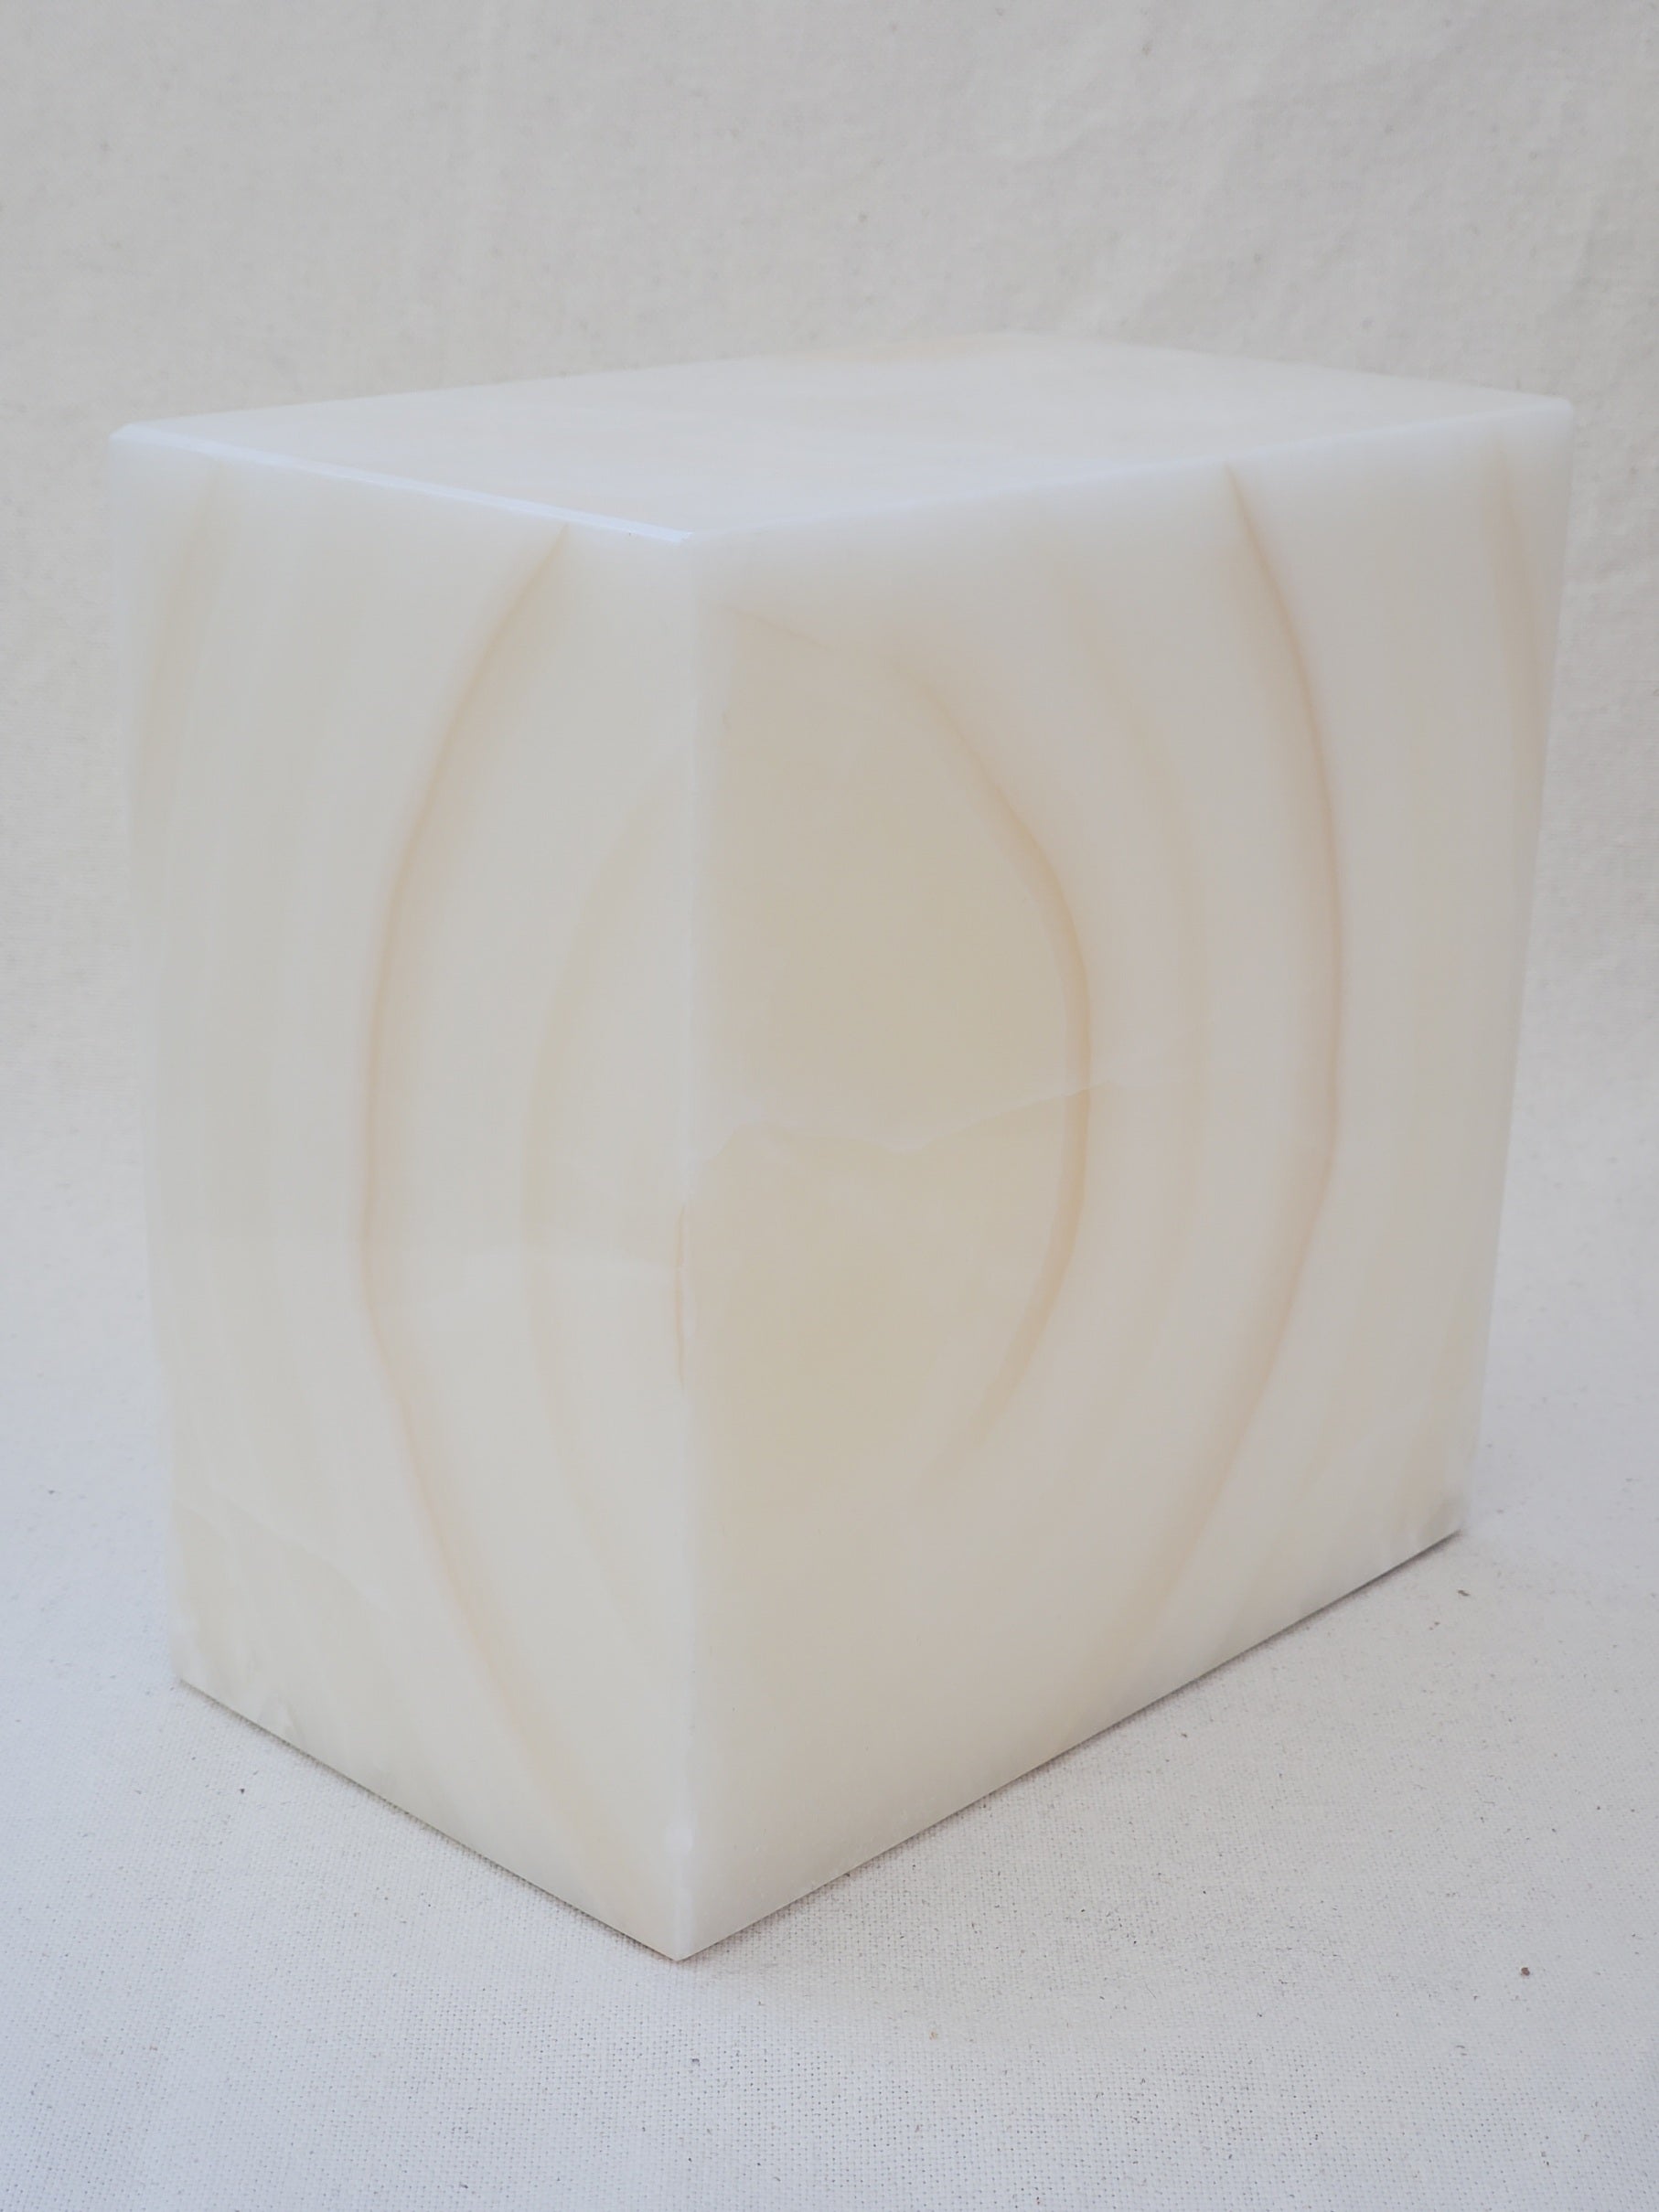 Onyx Stone White Memorial Urn, Square. Fast Shipping, Handmade. Buy Now at www.felipeandgrace.com 